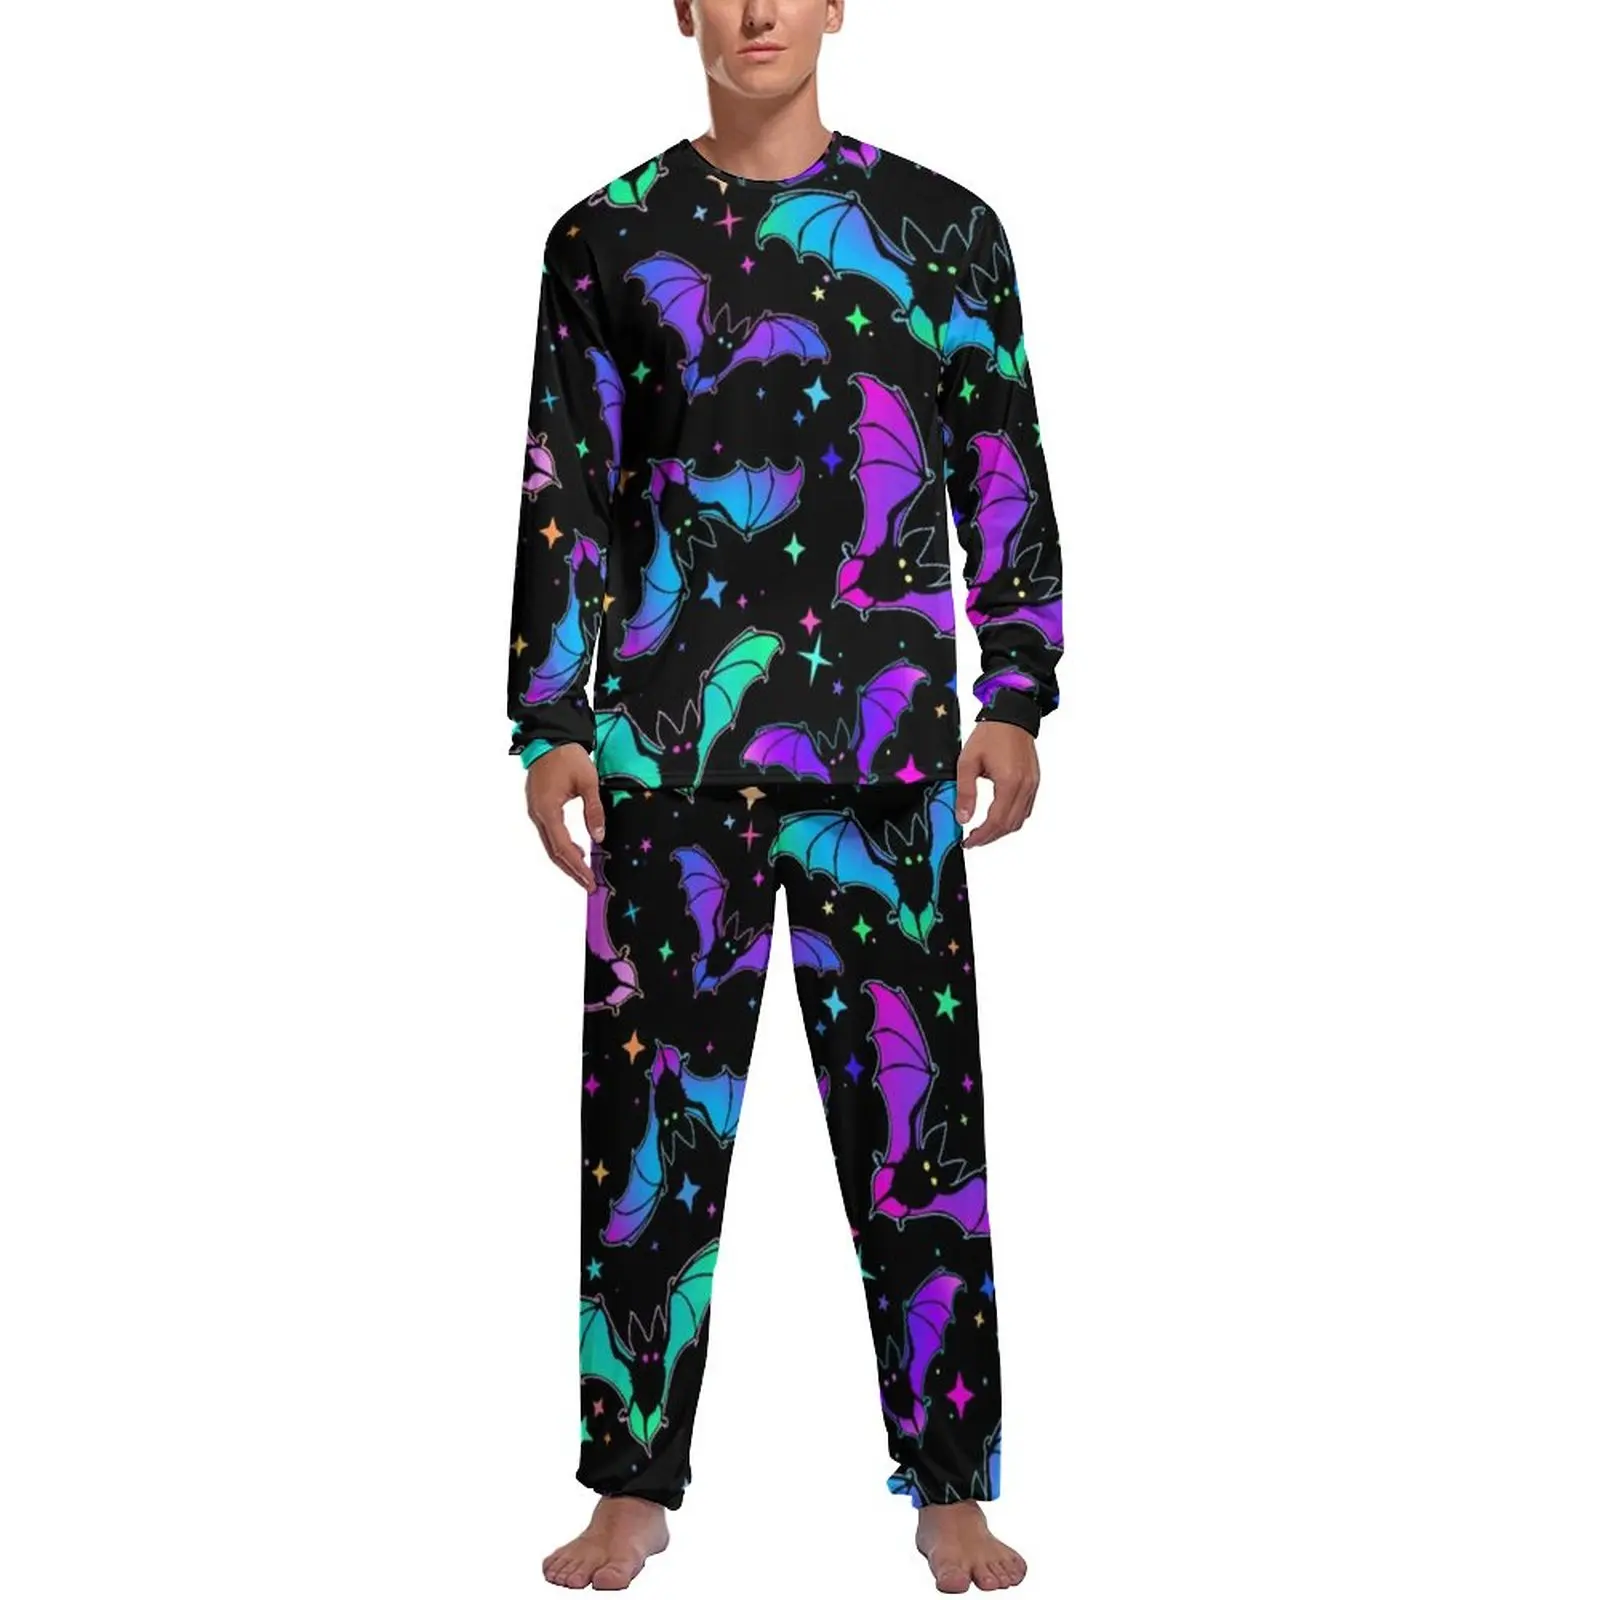 Bats And Star Pajamas Autumn Gothic Halloween Room Nightwear Men 2 Pieces Design Long-Sleeve Warm Pajamas Set